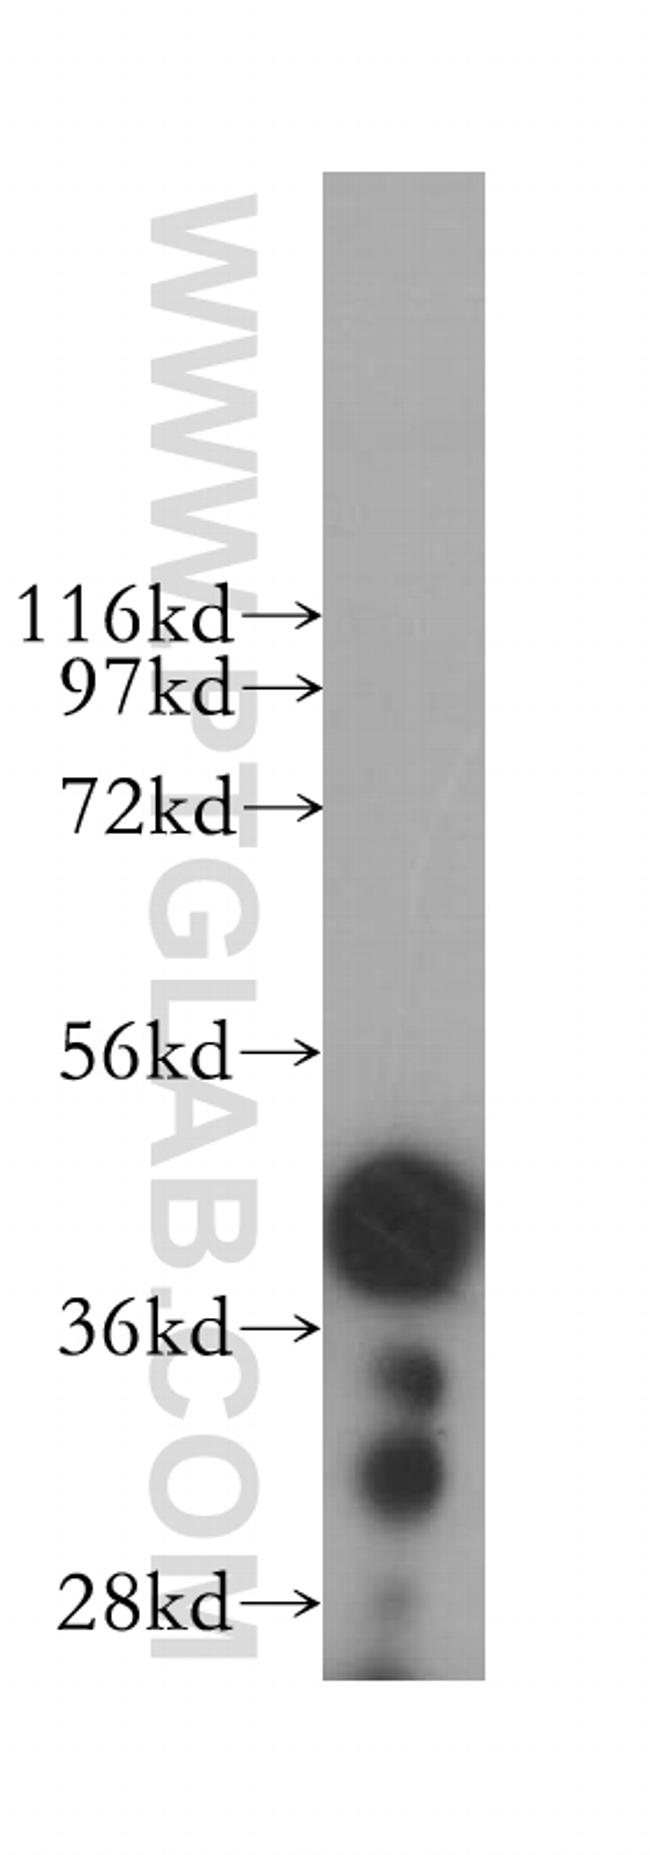 POFUT1 Antibody in Western Blot (WB)